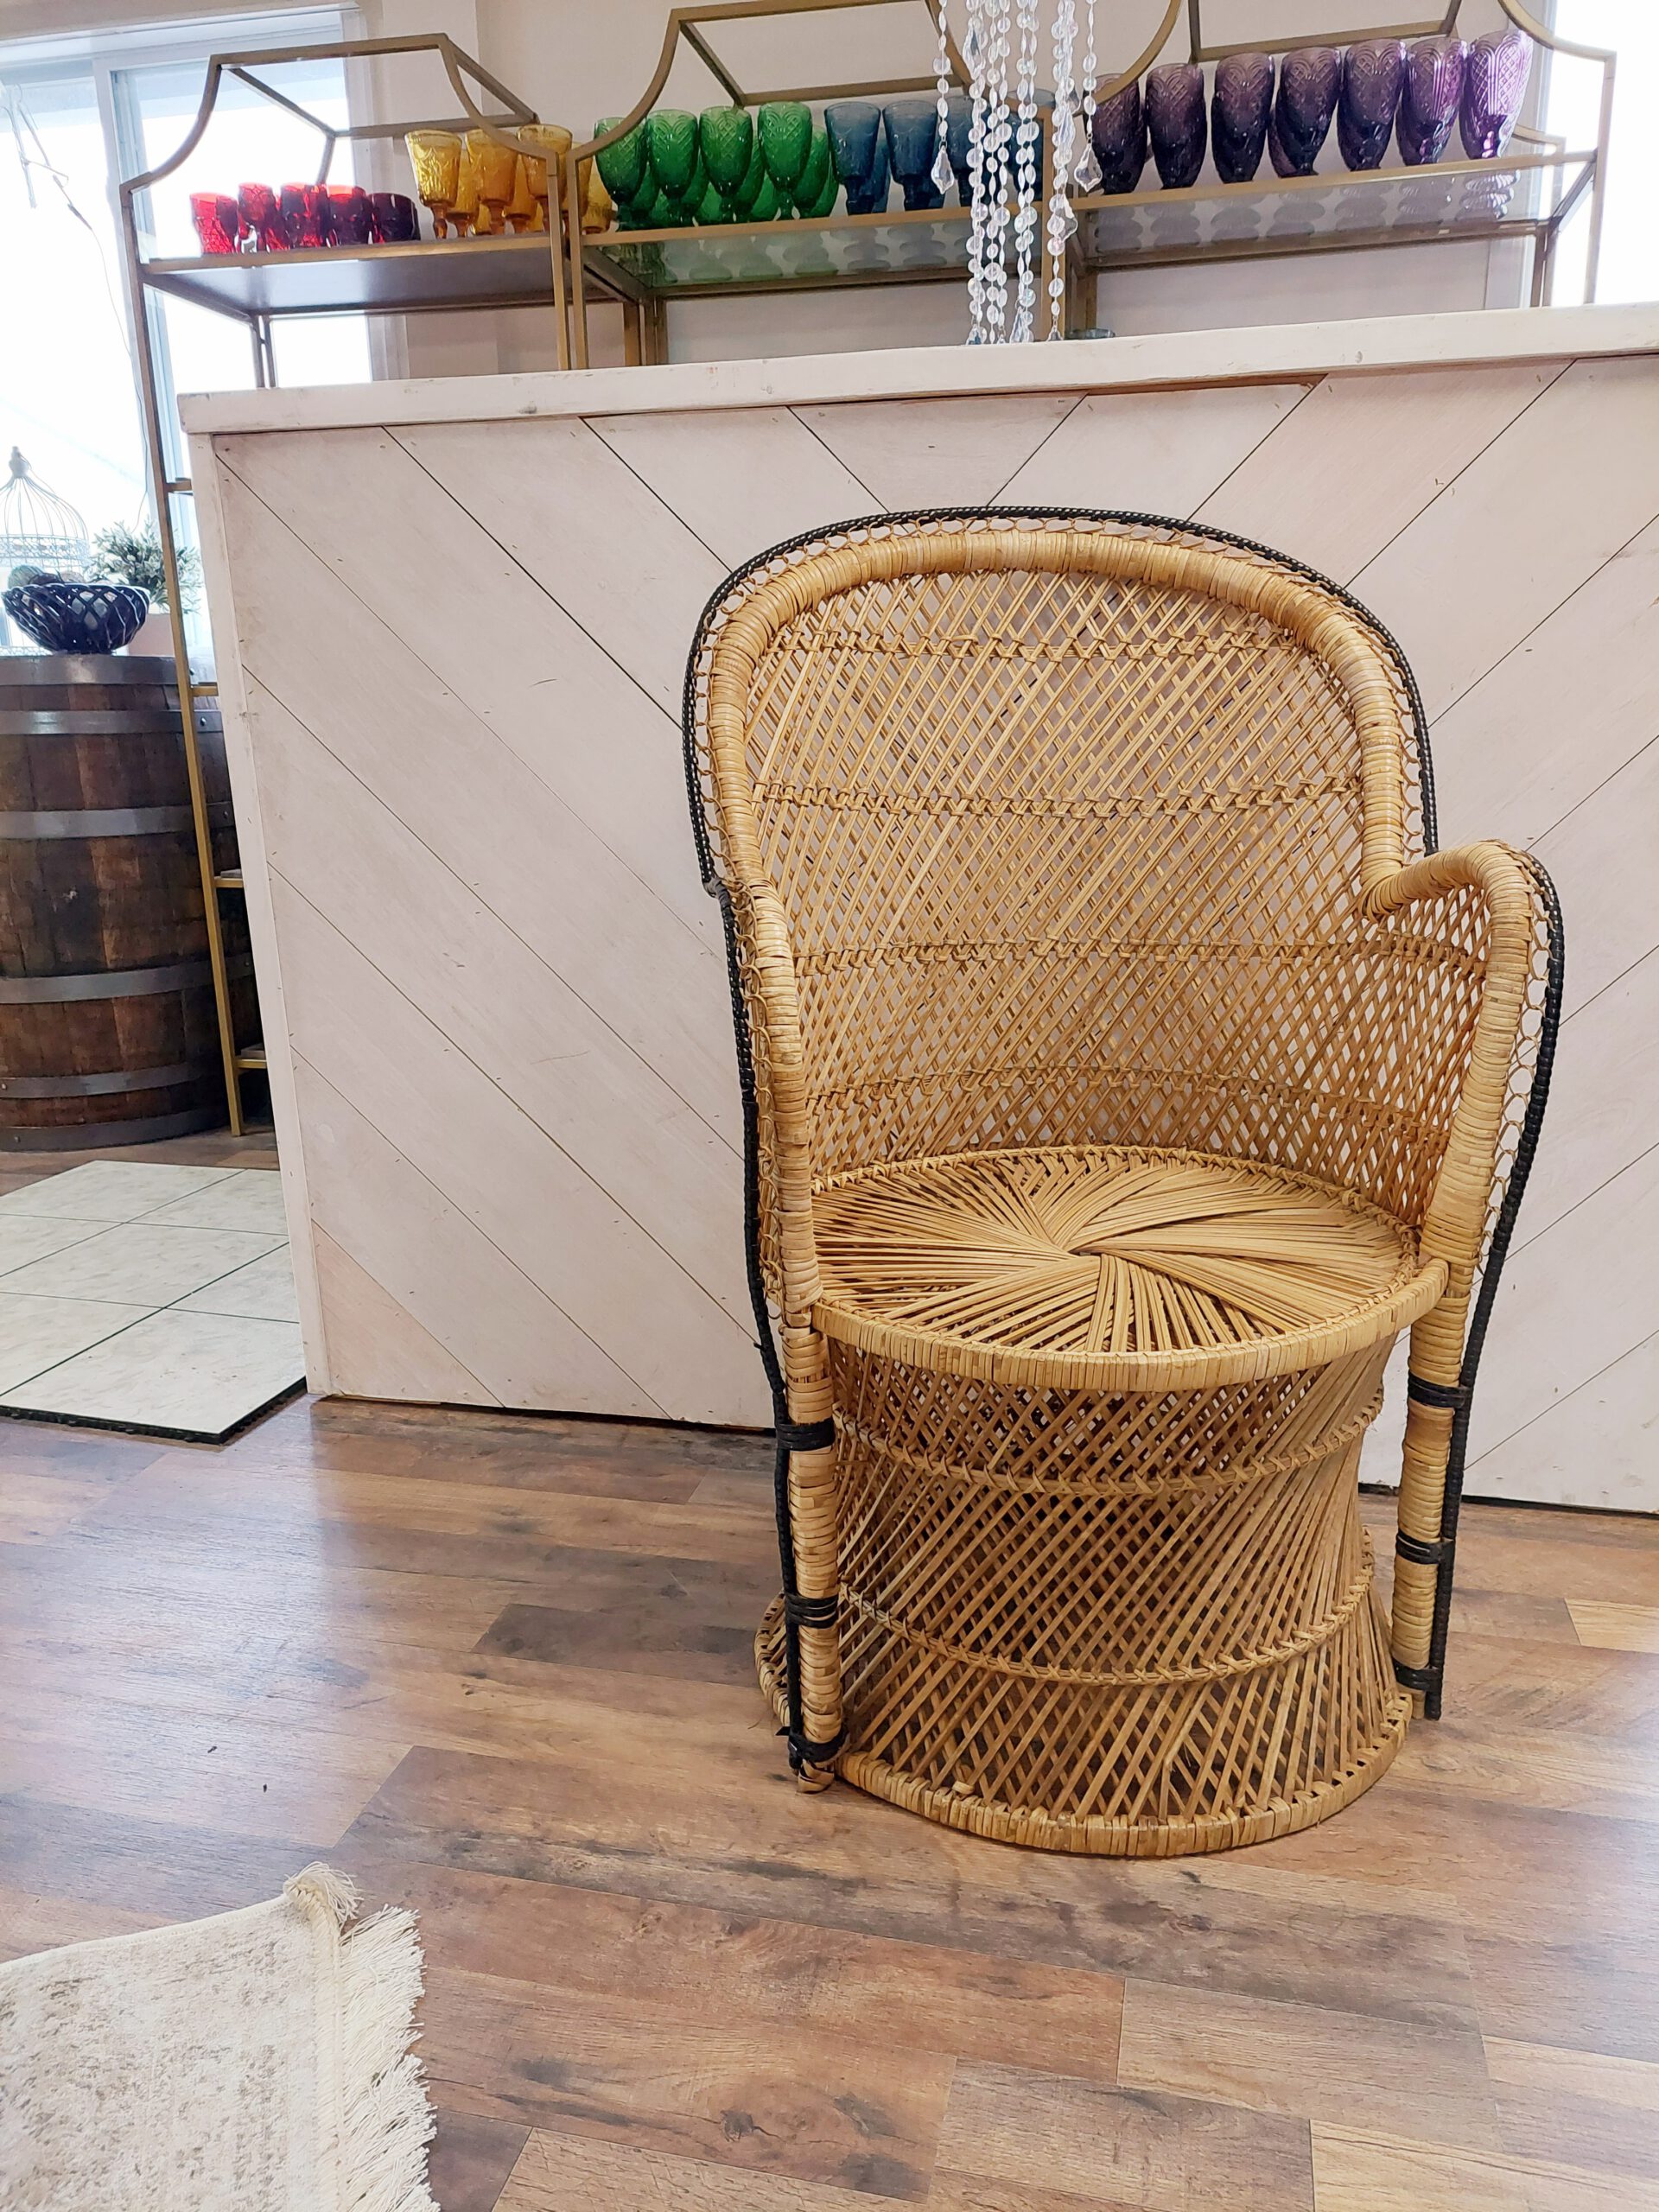 Image of wicker chair rental